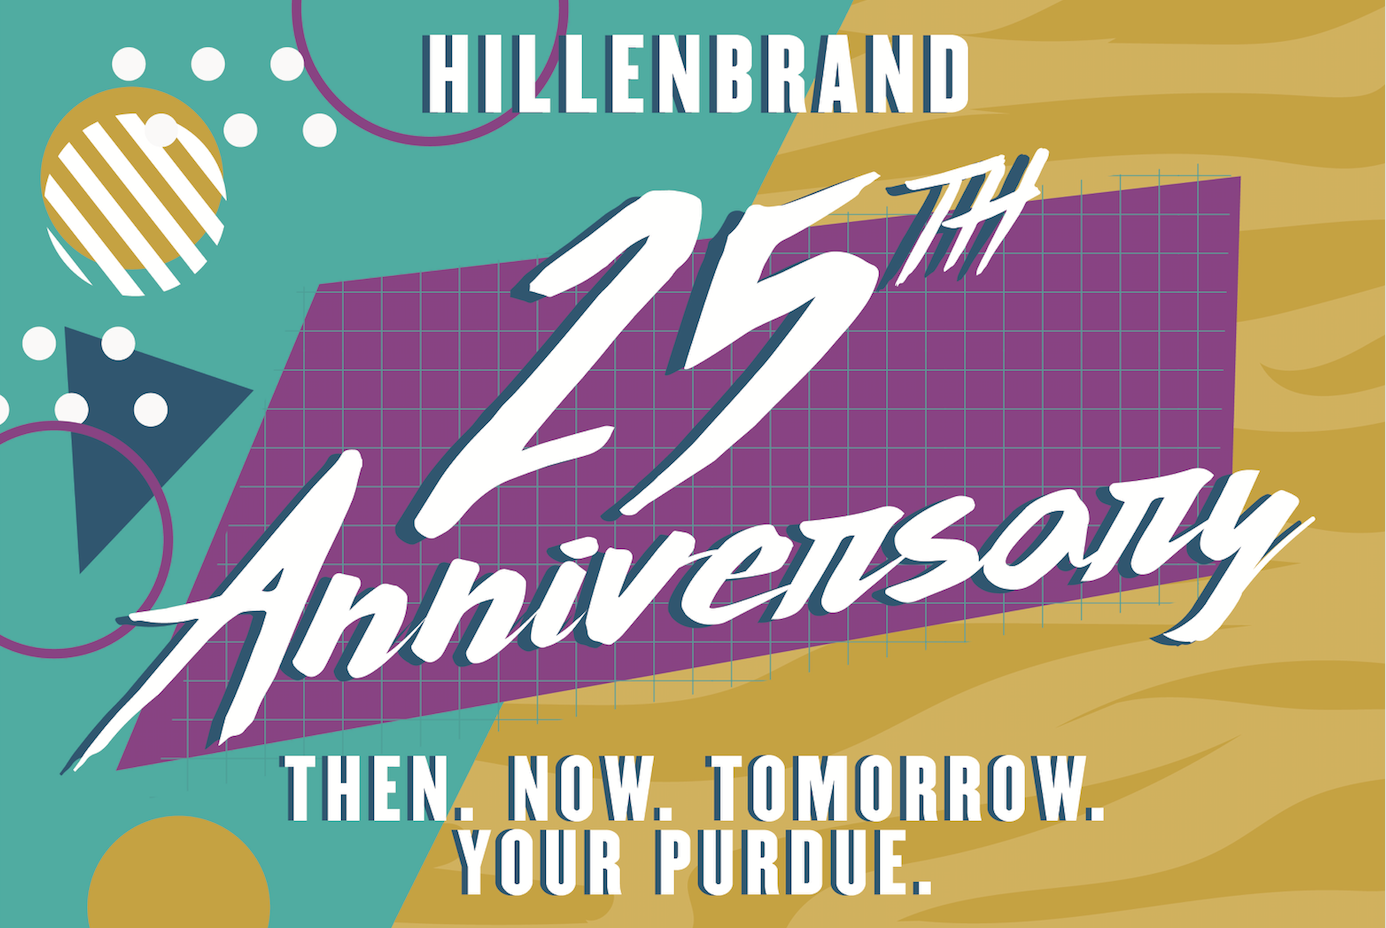 Hillenbrand 25th Anniversary